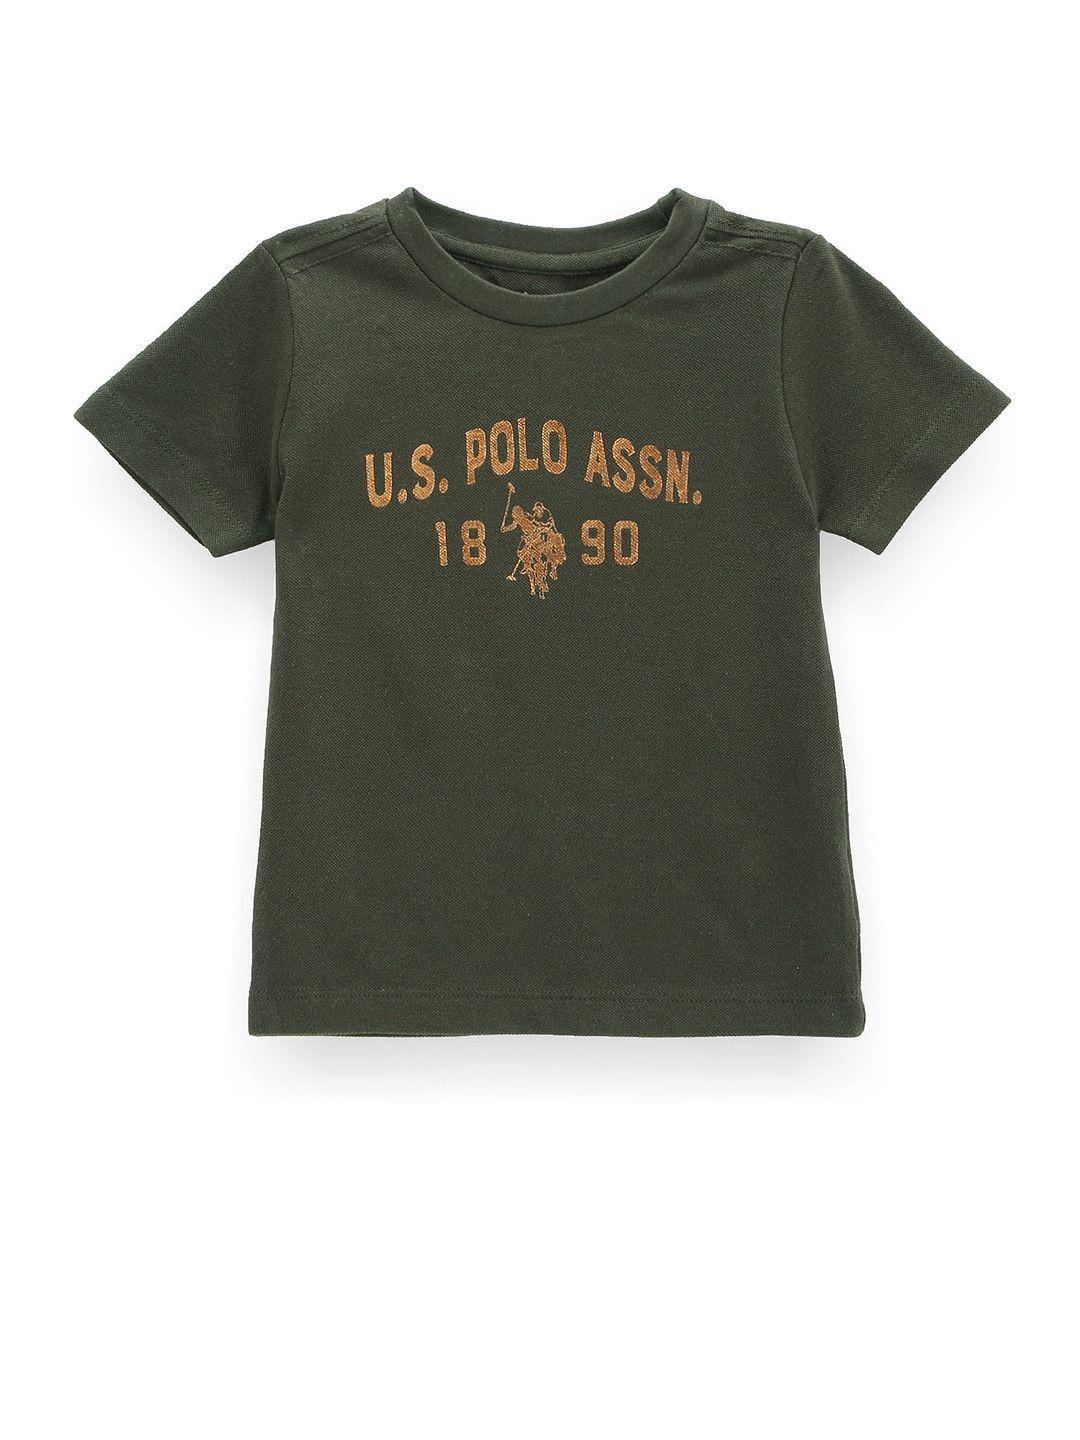 u.s. polo assn. kids boys typography printed pure cotton t-shirt